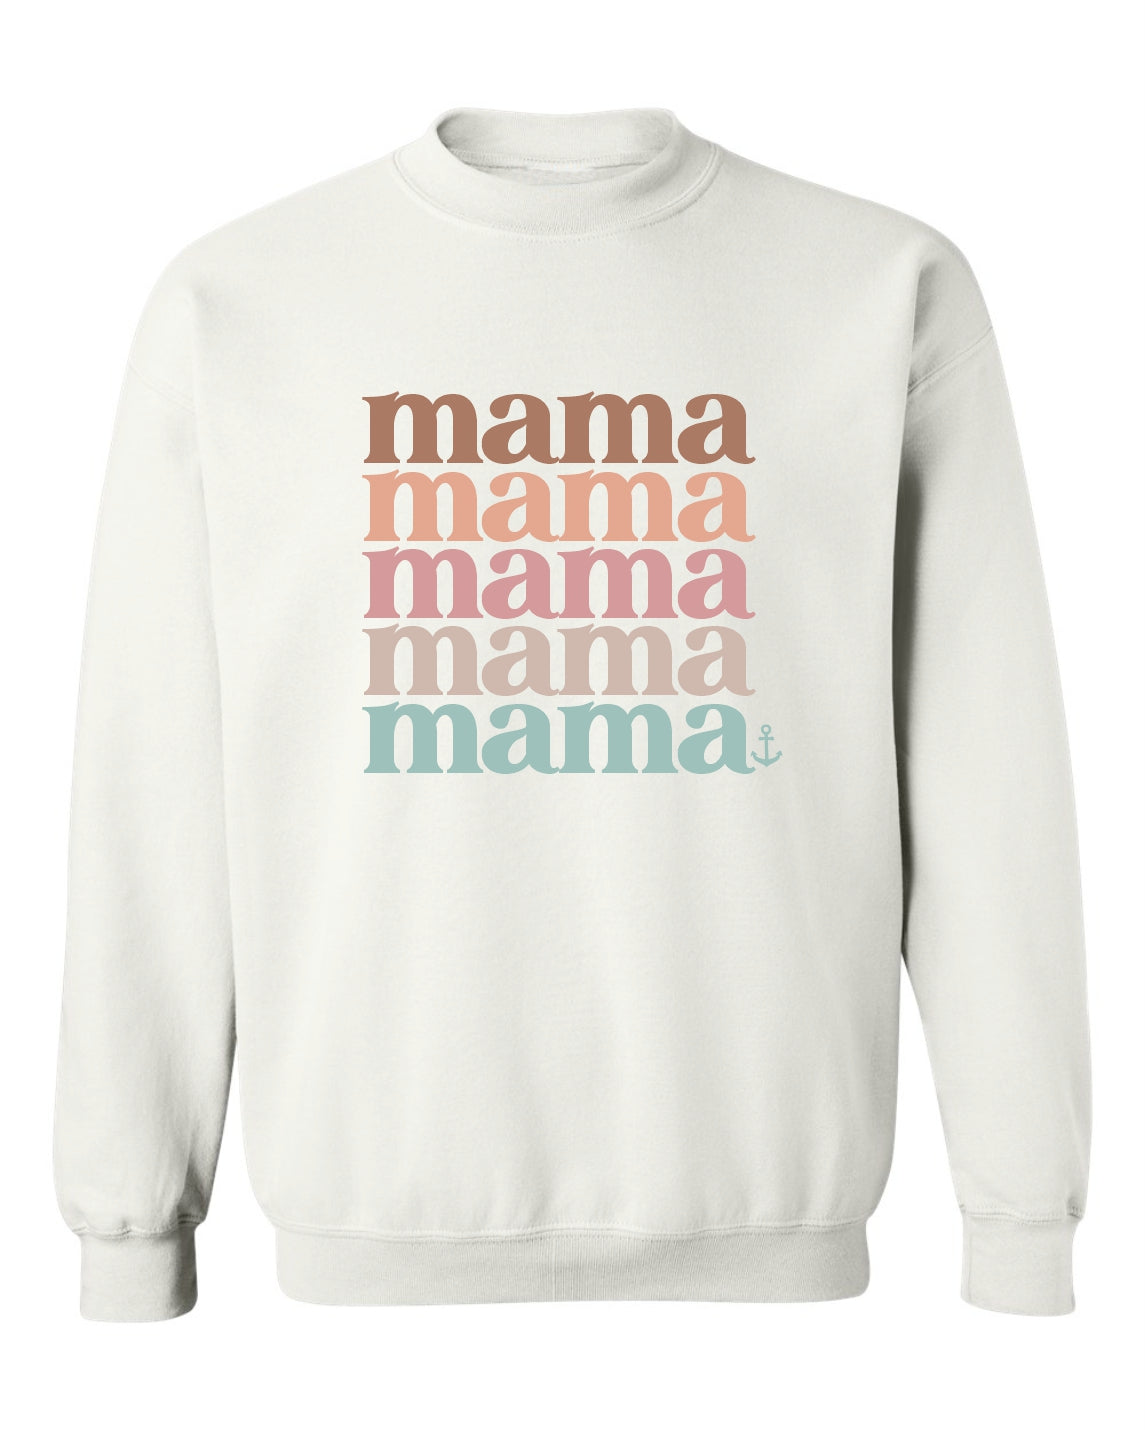 "Mama" Multicolour Unisex Crewneck Sweatshirt